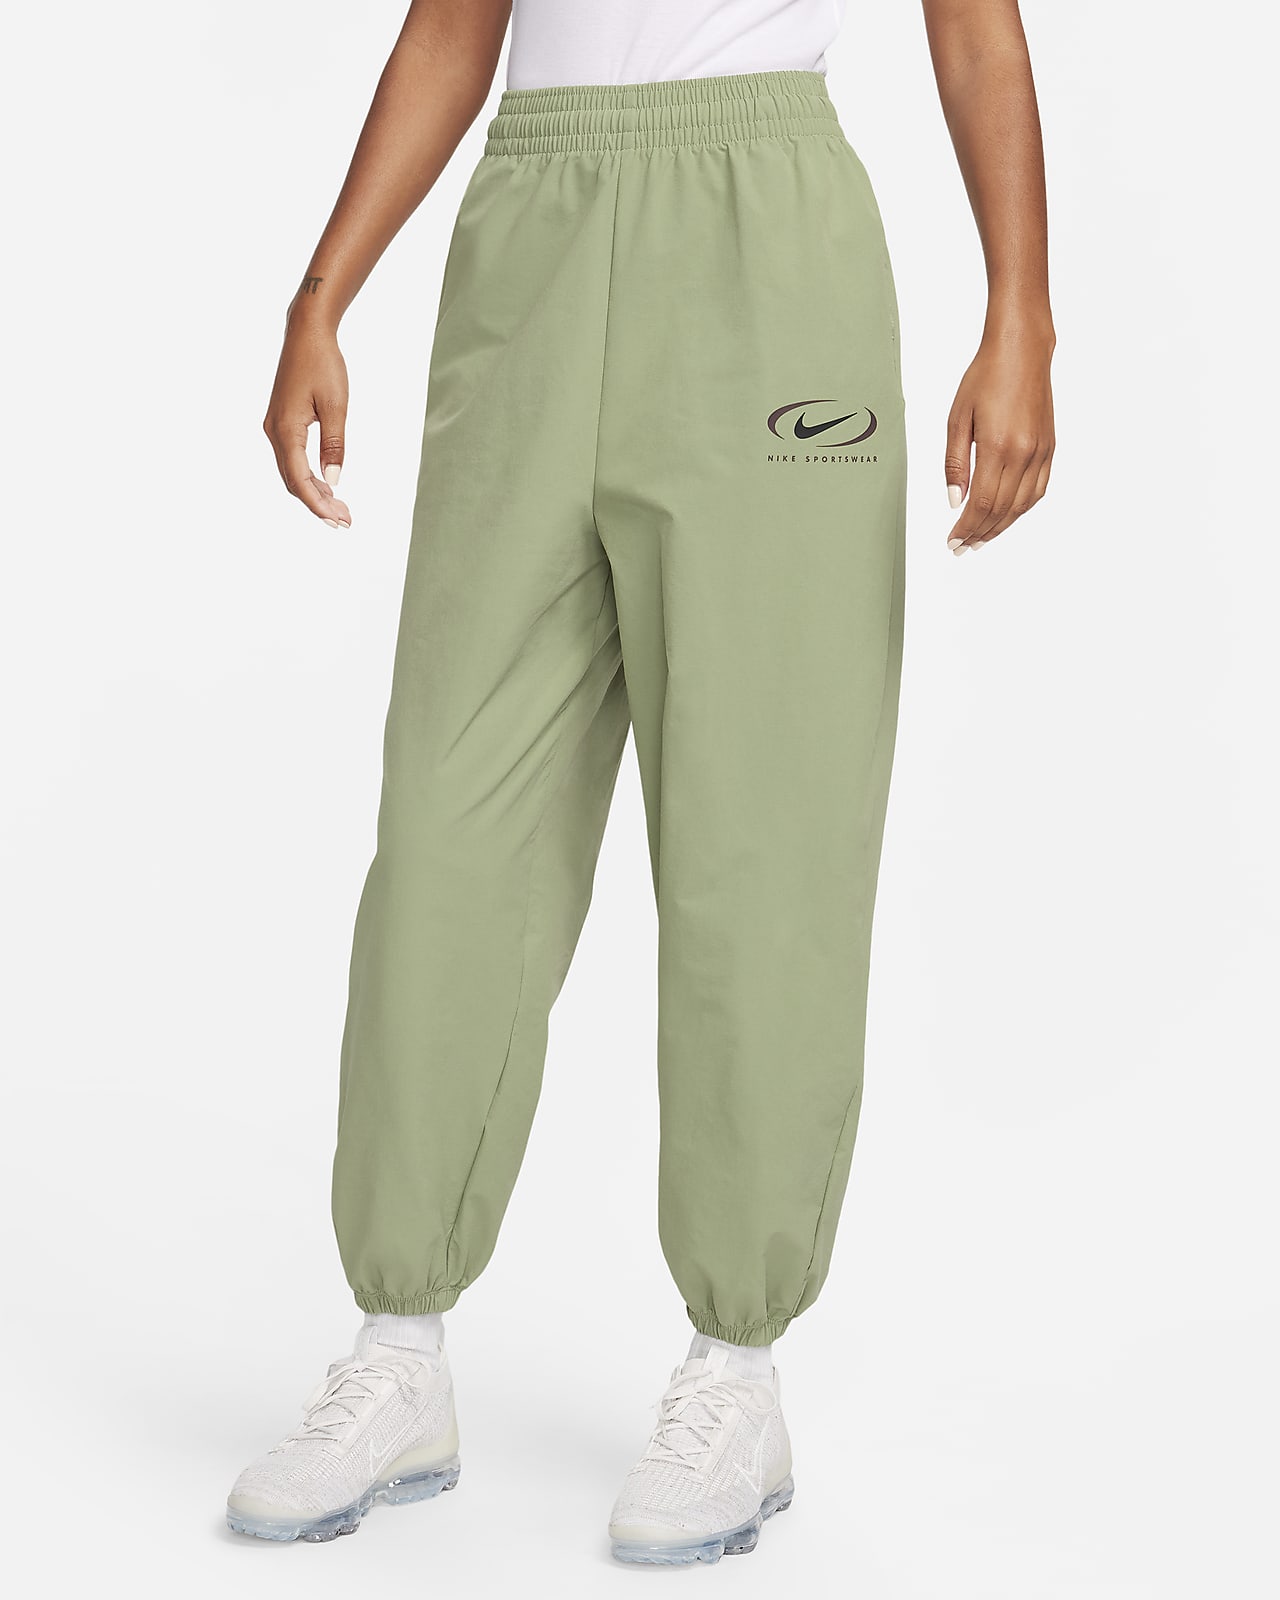 Pantalon de jogging tissé Nike Sportswear pour femme